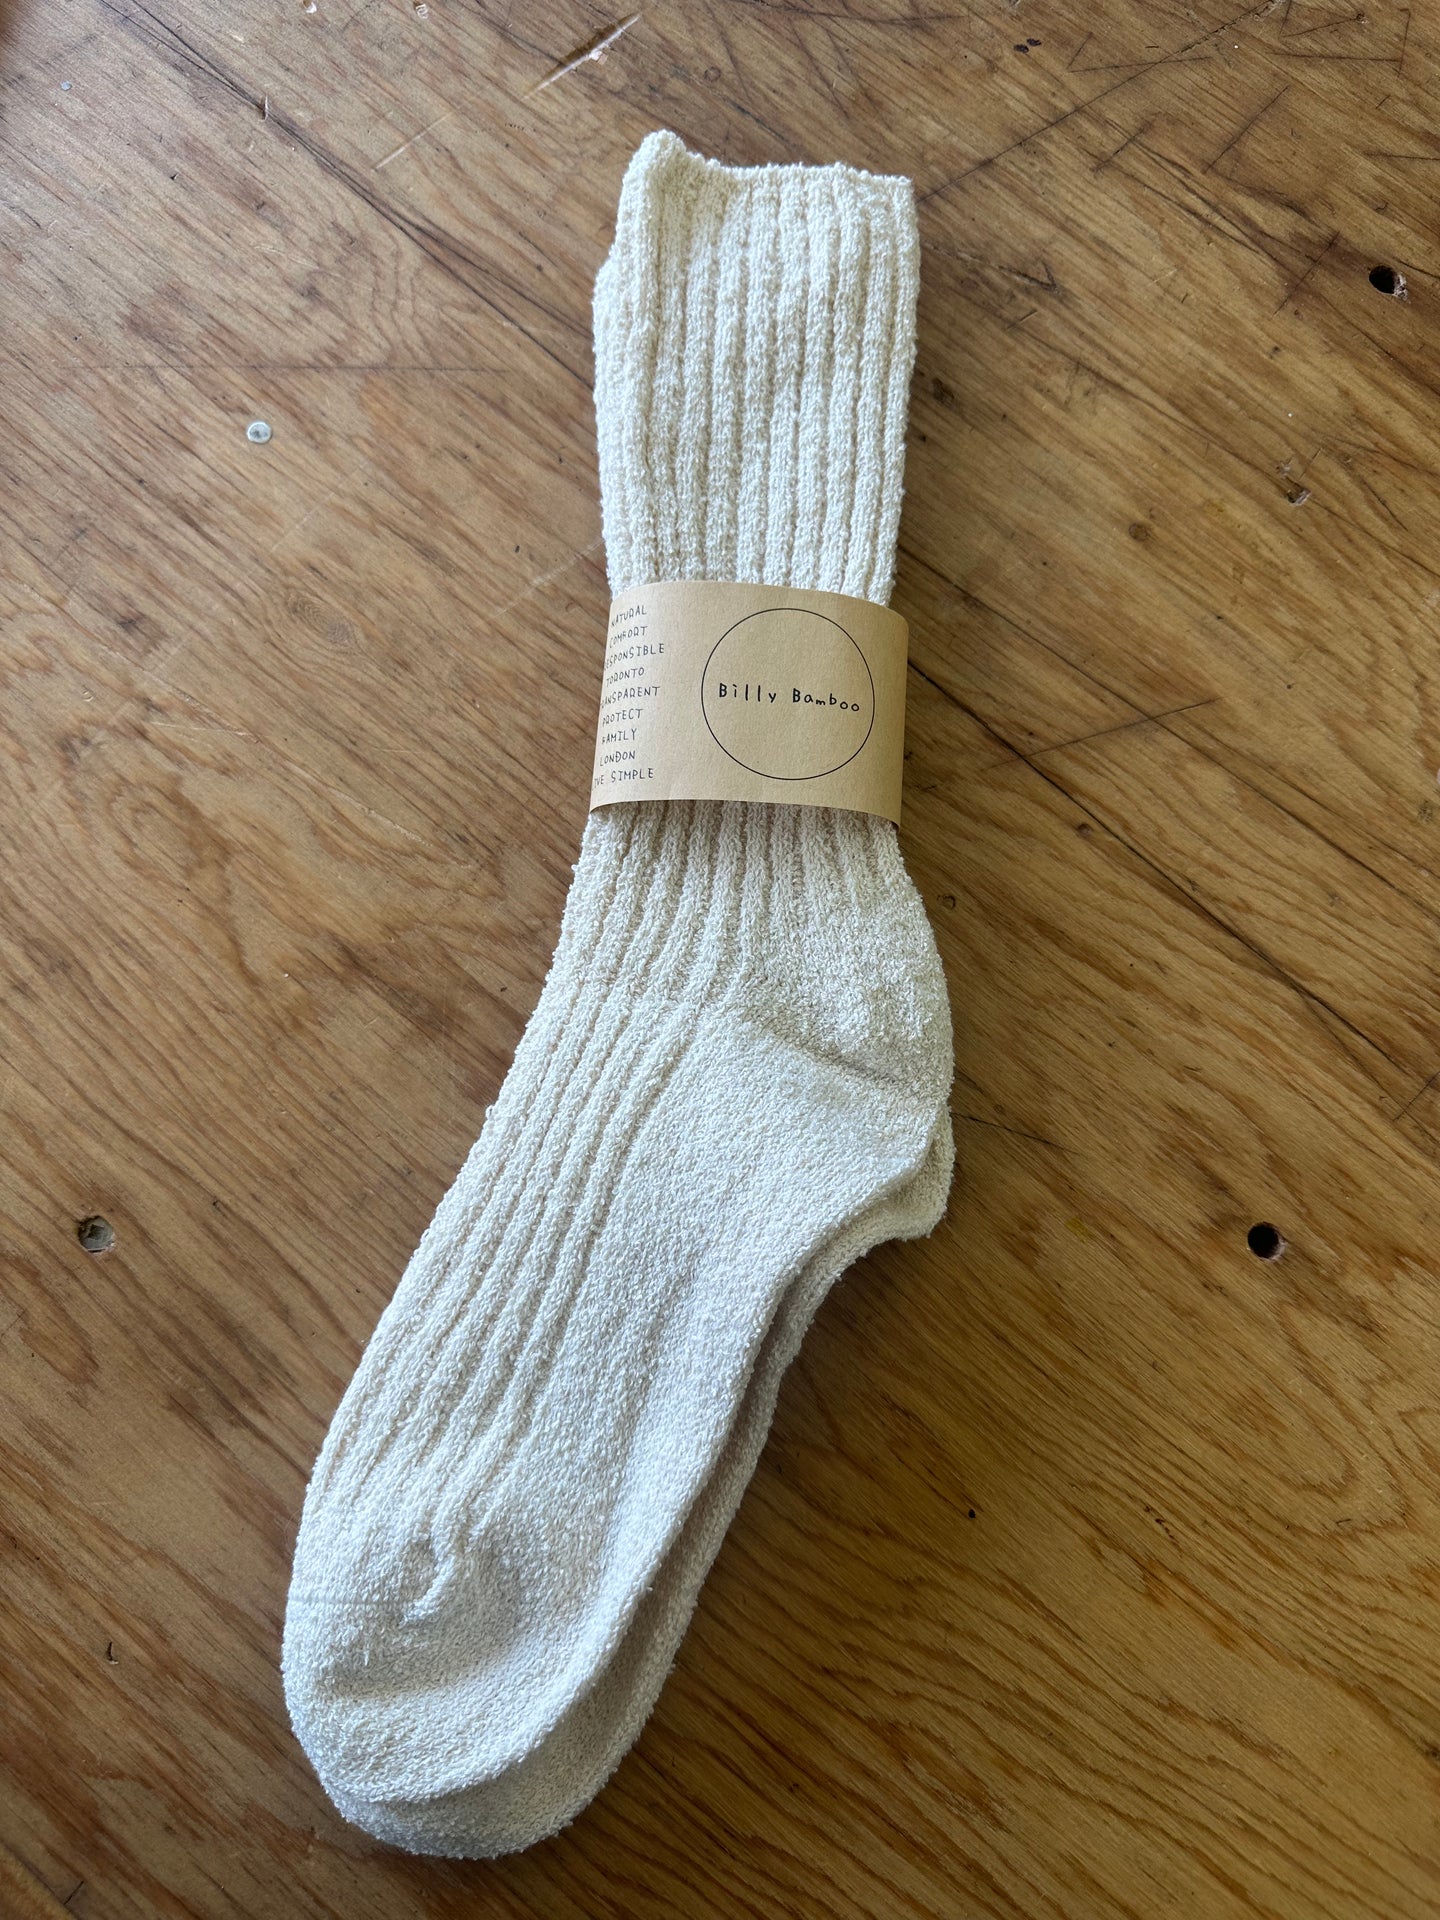 Billy Bamboo - Towel Cotton Socks